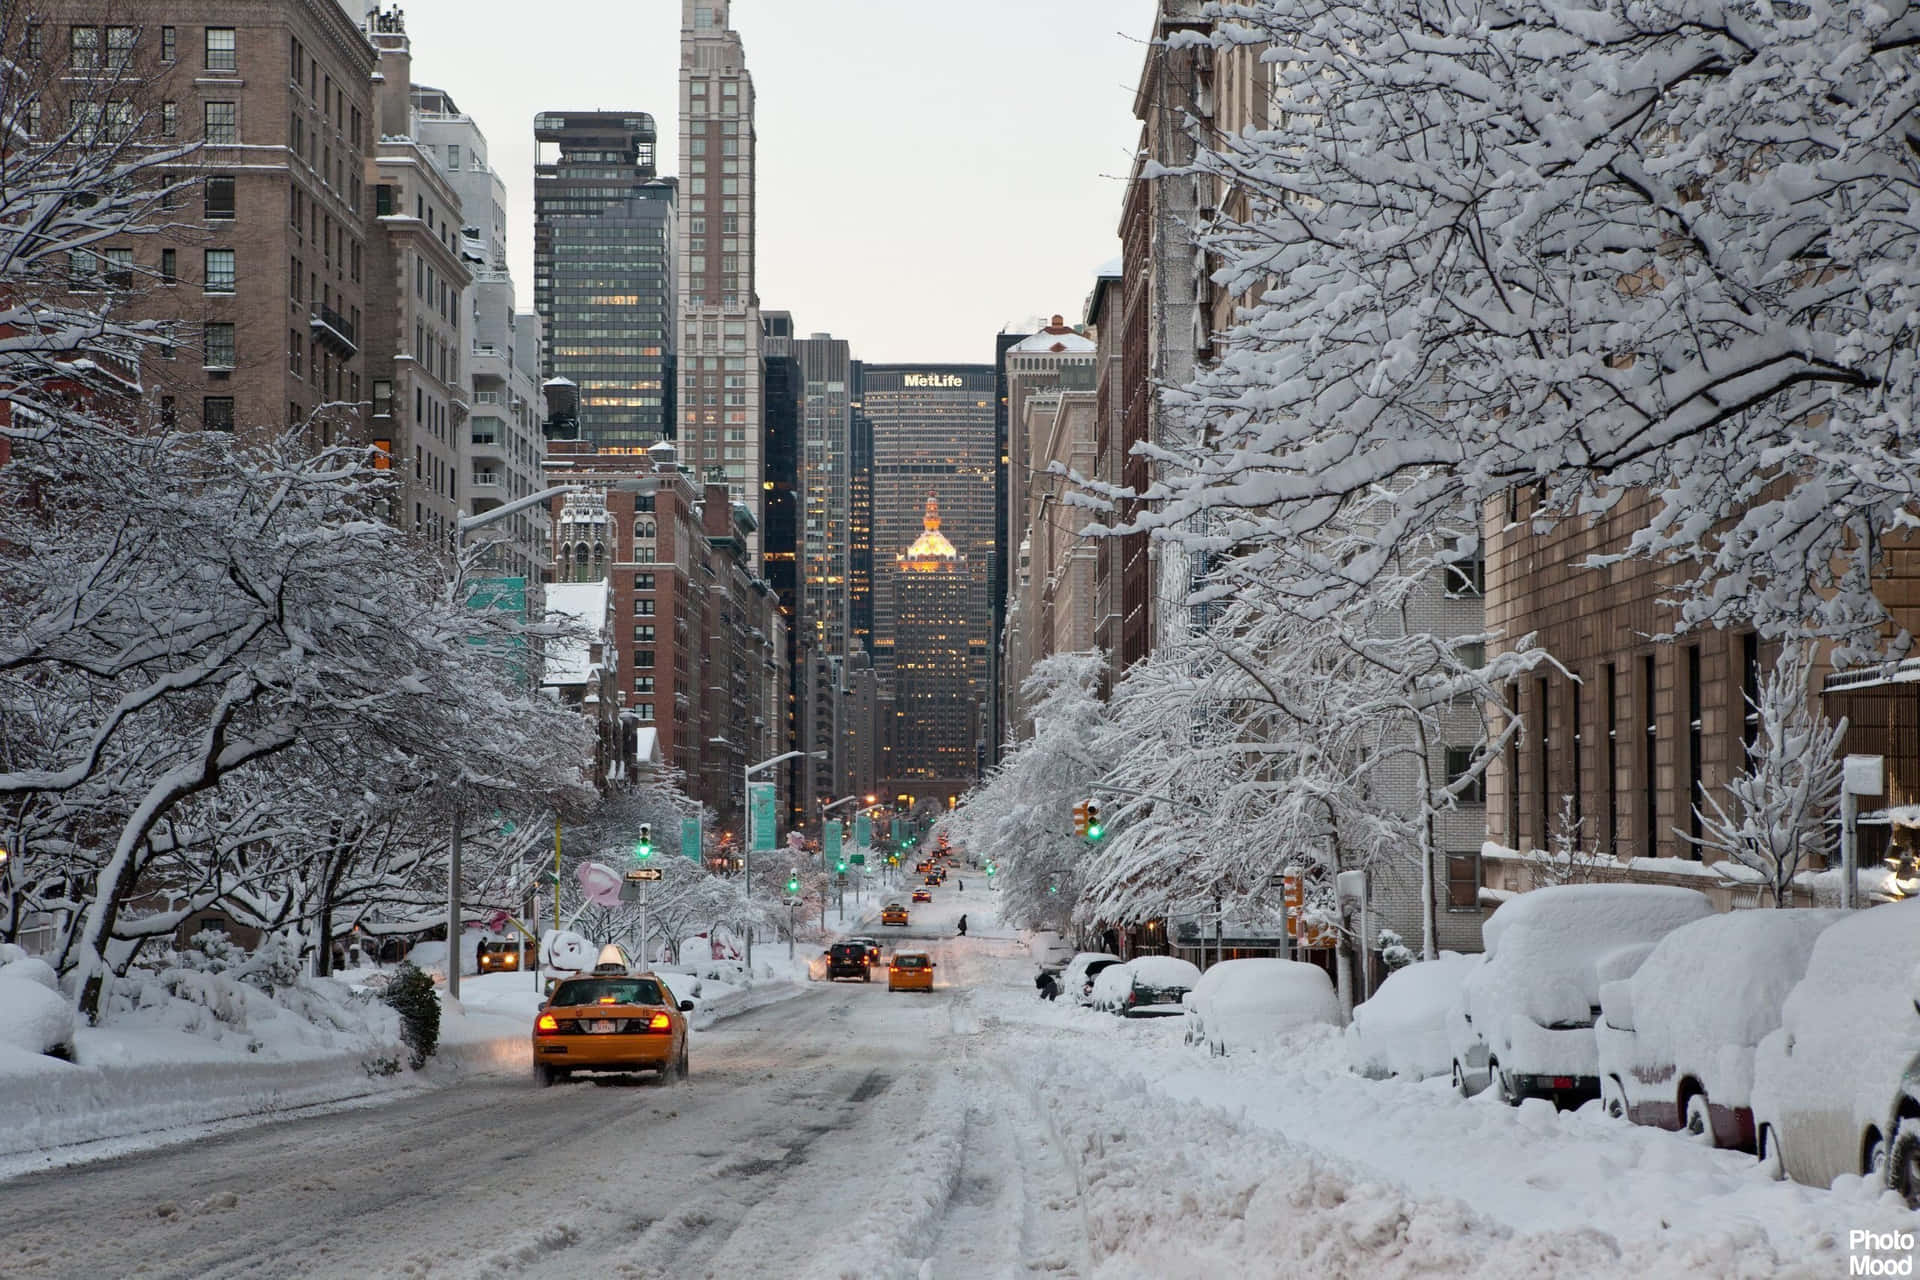 Image  A Massive Snowfall Blankets a Fabled Neighborhood